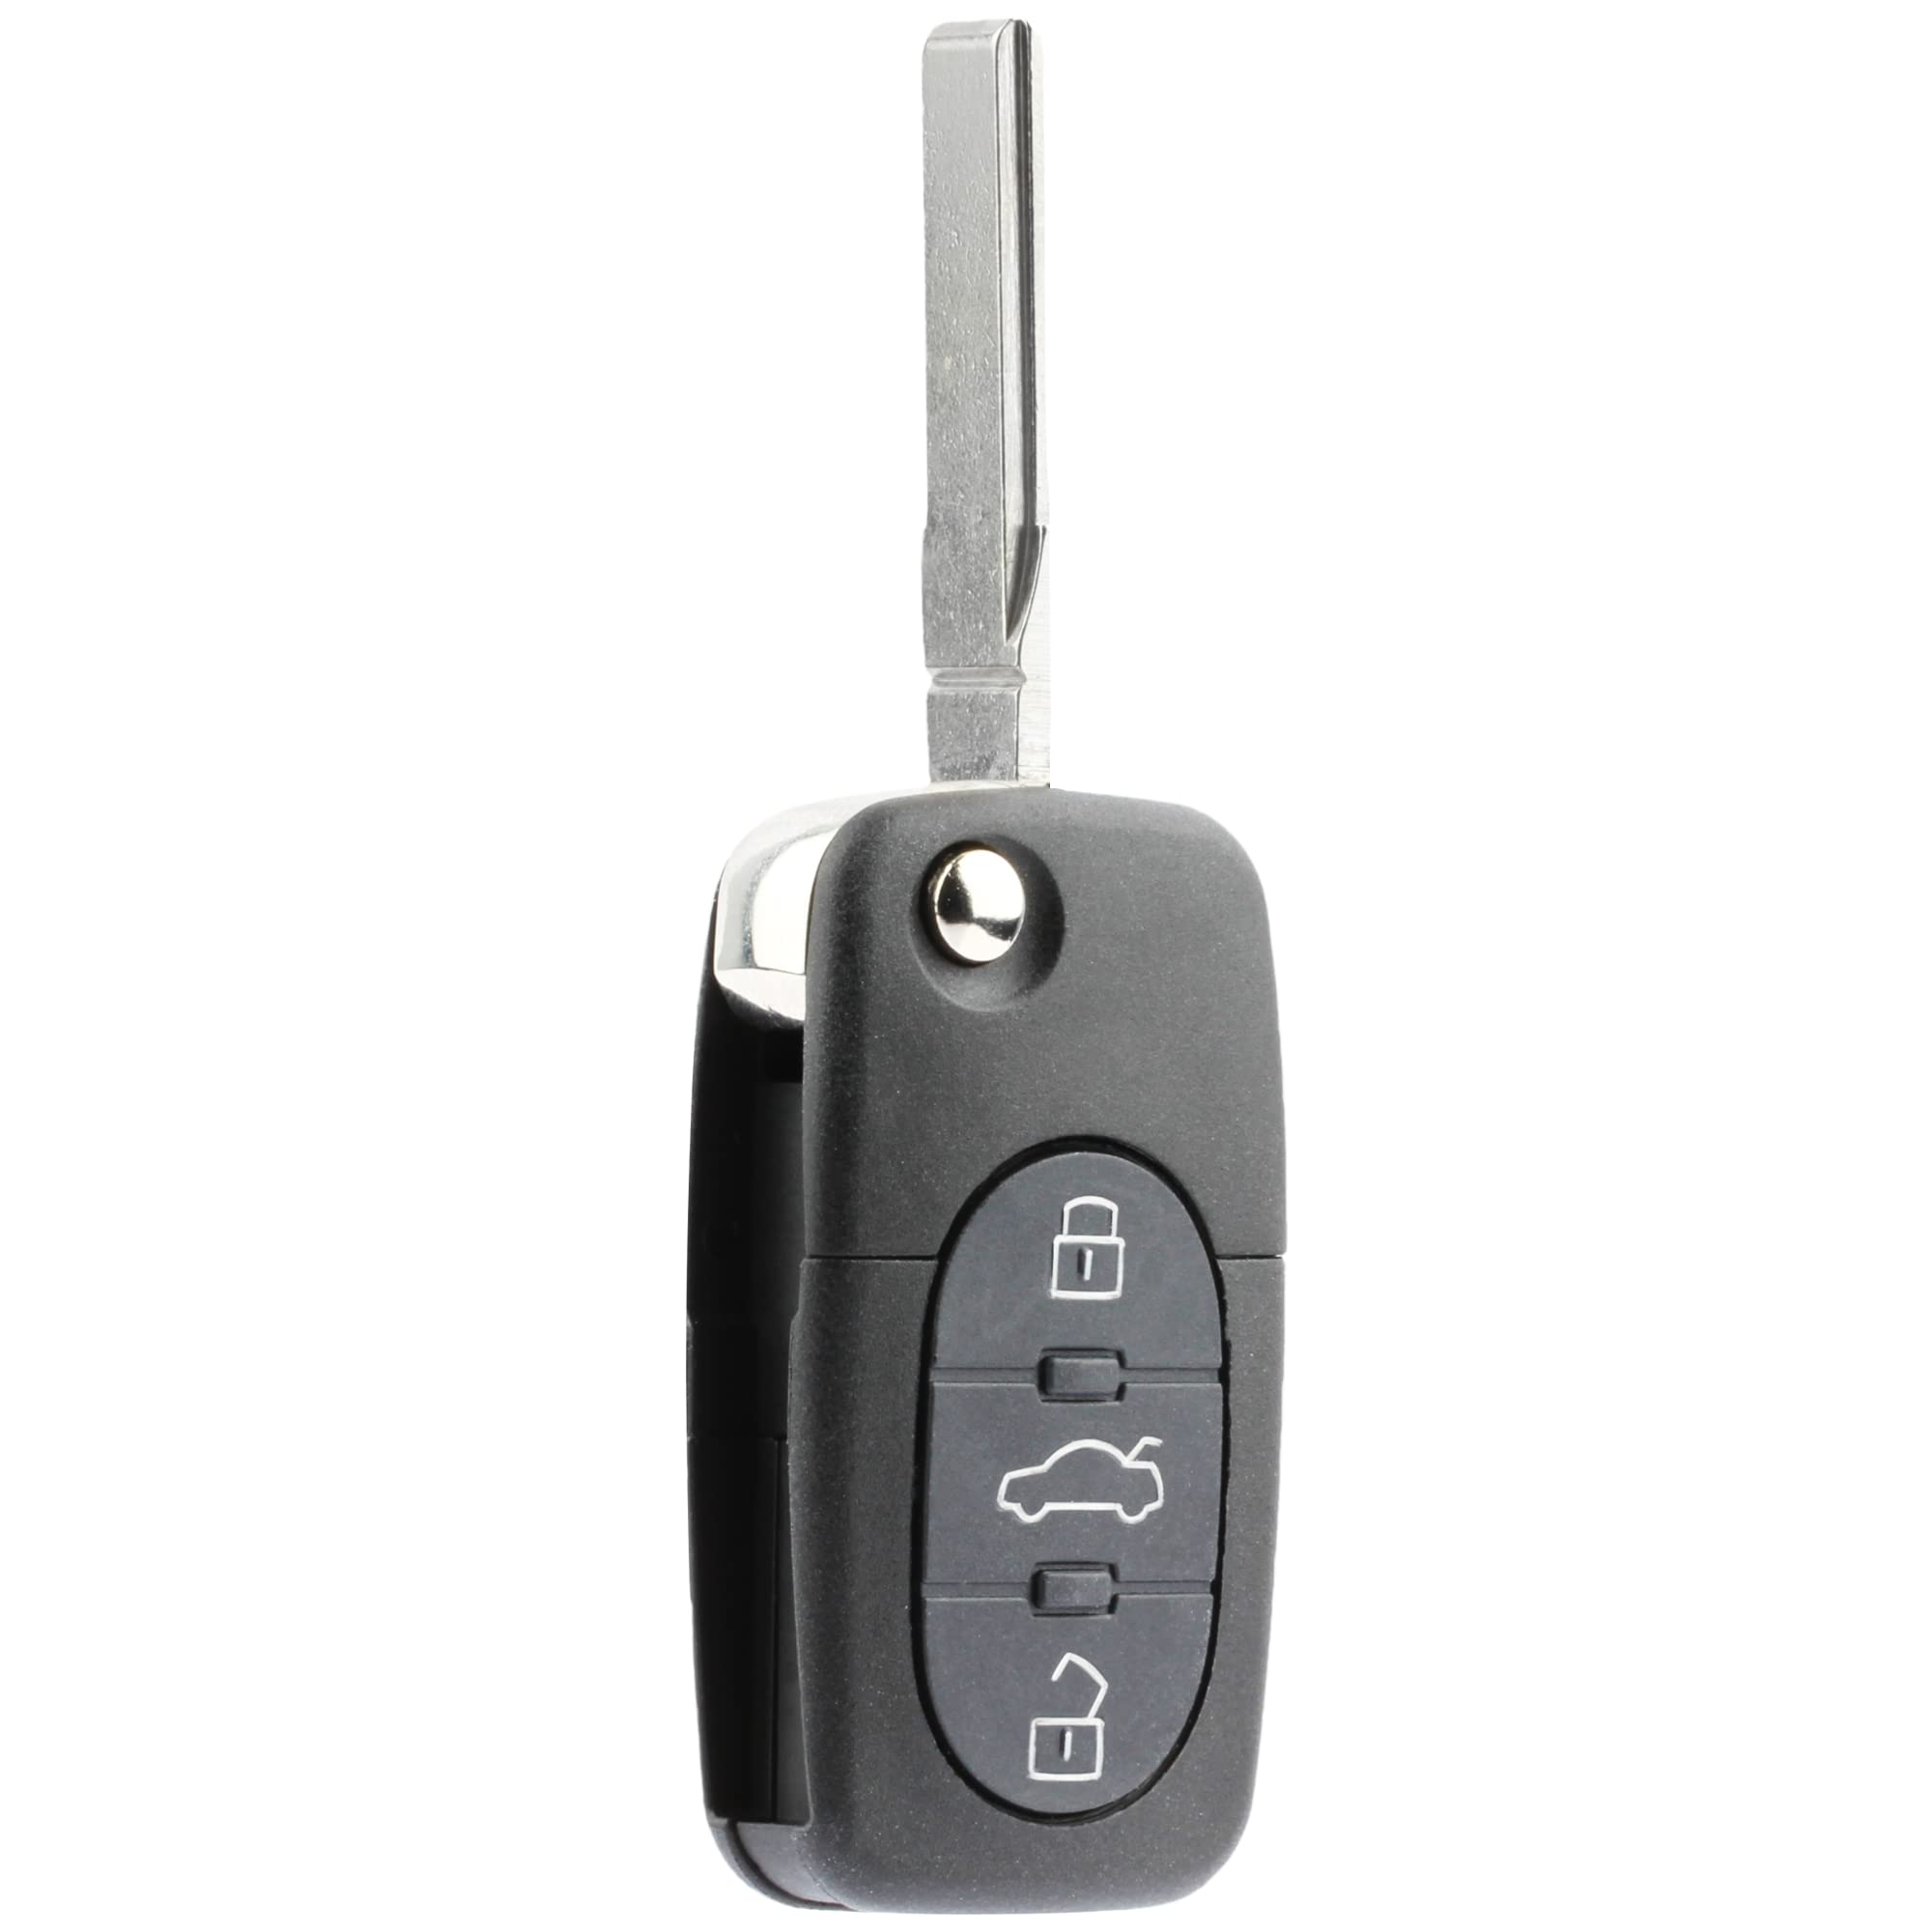 USARemote Replacement Keyless Entry Remote Flip Key Fob fits 1998 1999 2000 2001 VW Beetle, Golf, Jetta, Passat (HLO1J0959753F)